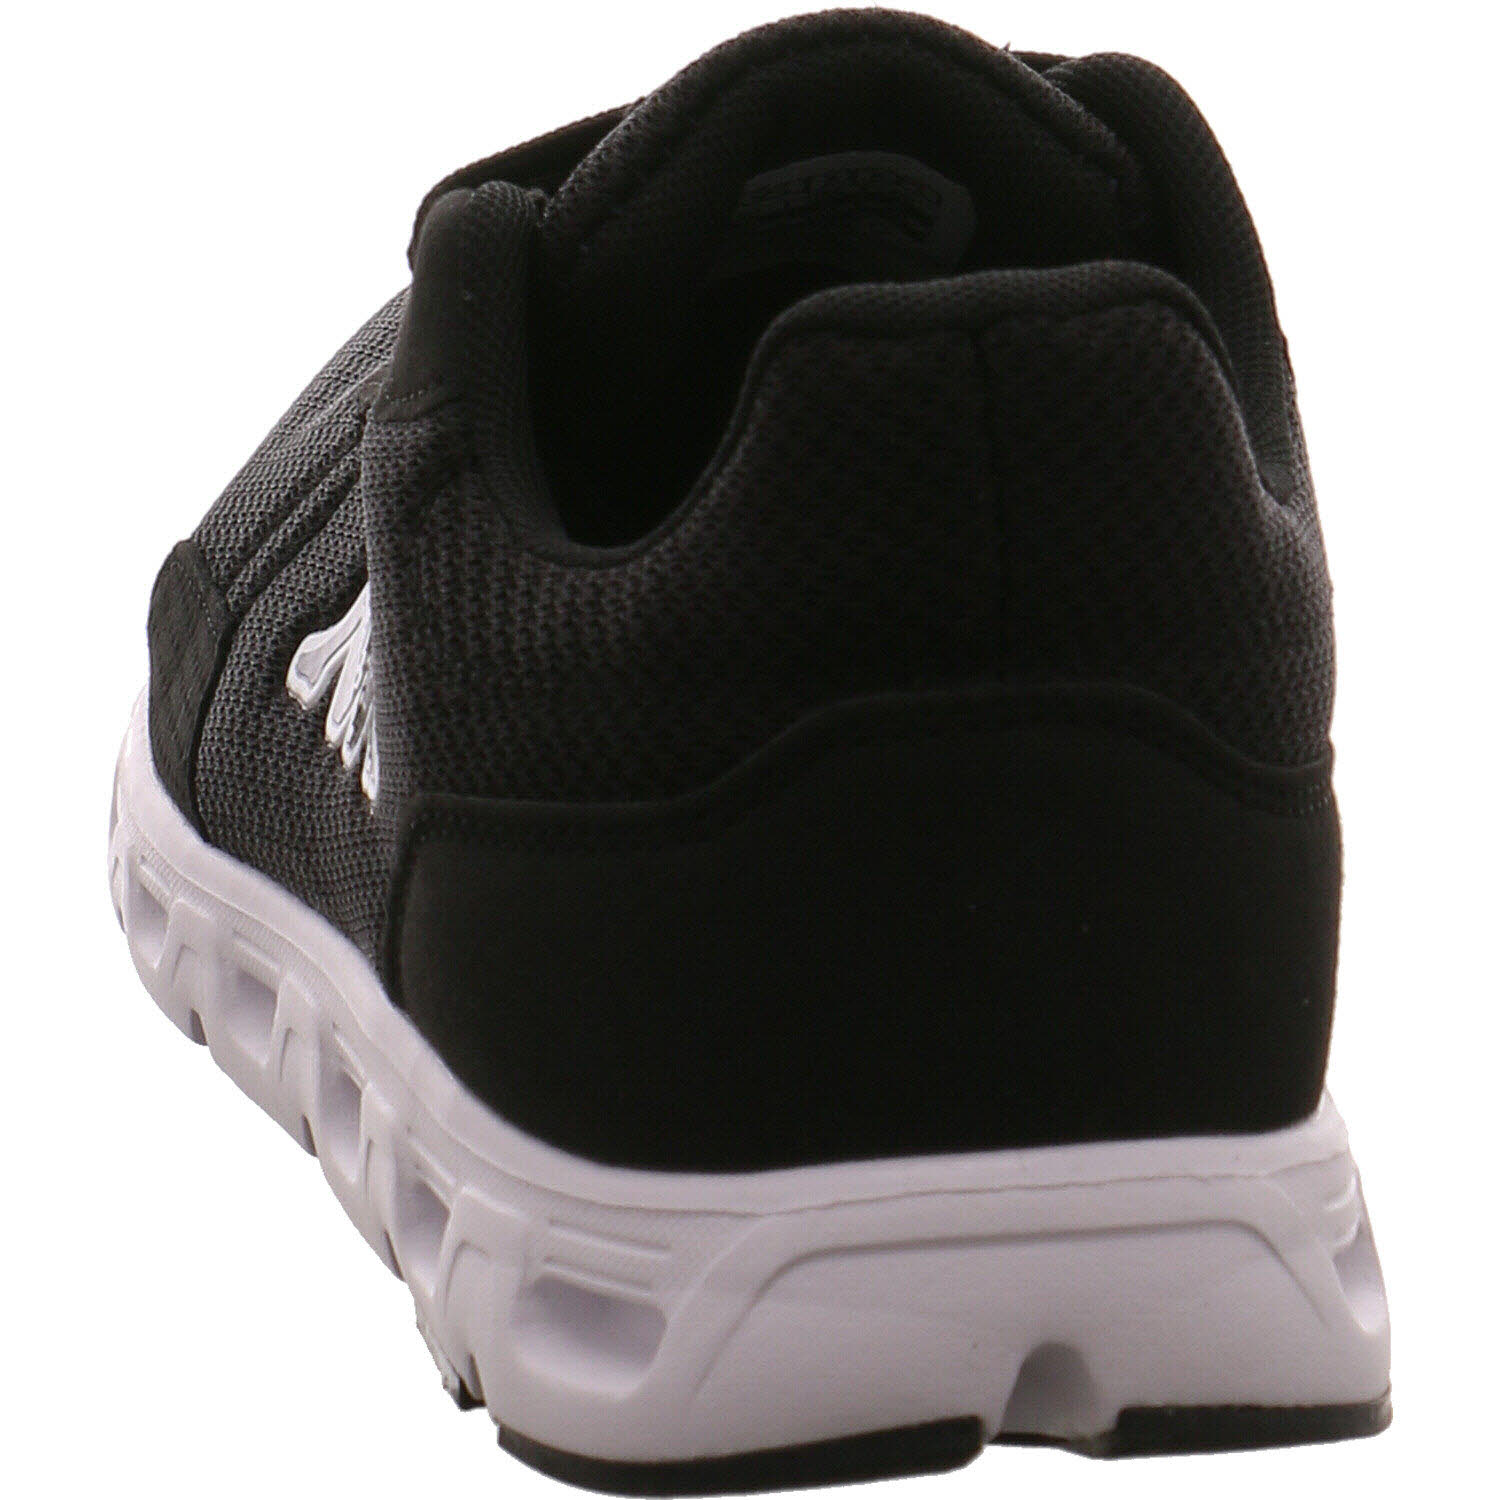 Kappa Sneaker low Stylecode: 243102 Getup in schwarz/weiß | P&P Shoes